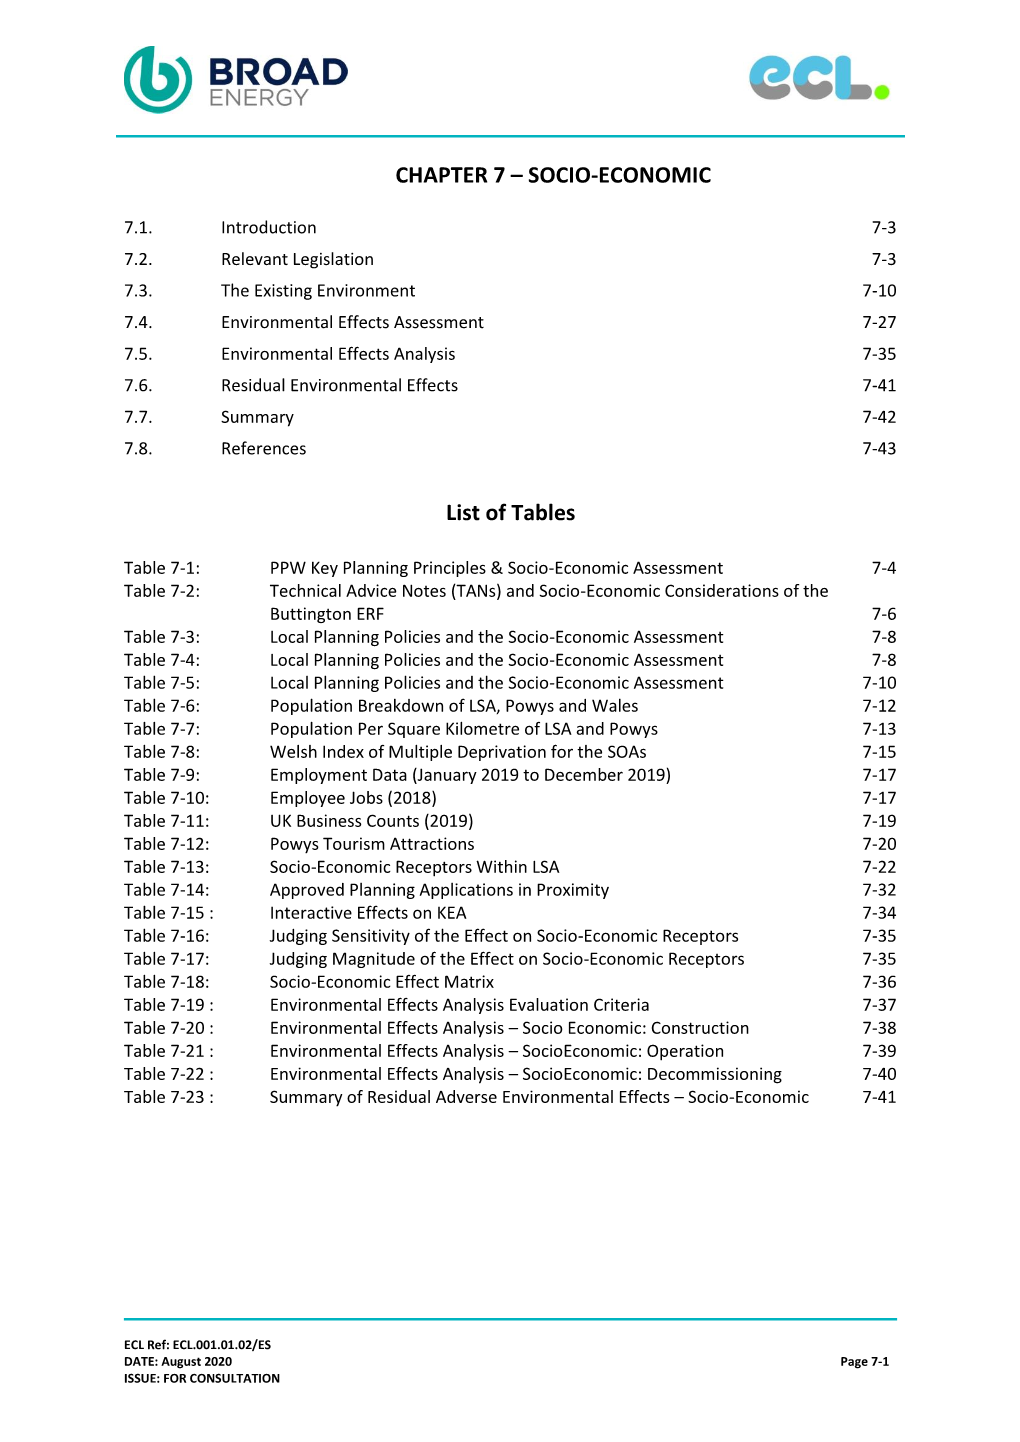 SOCIO-ECONOMIC List of Tables